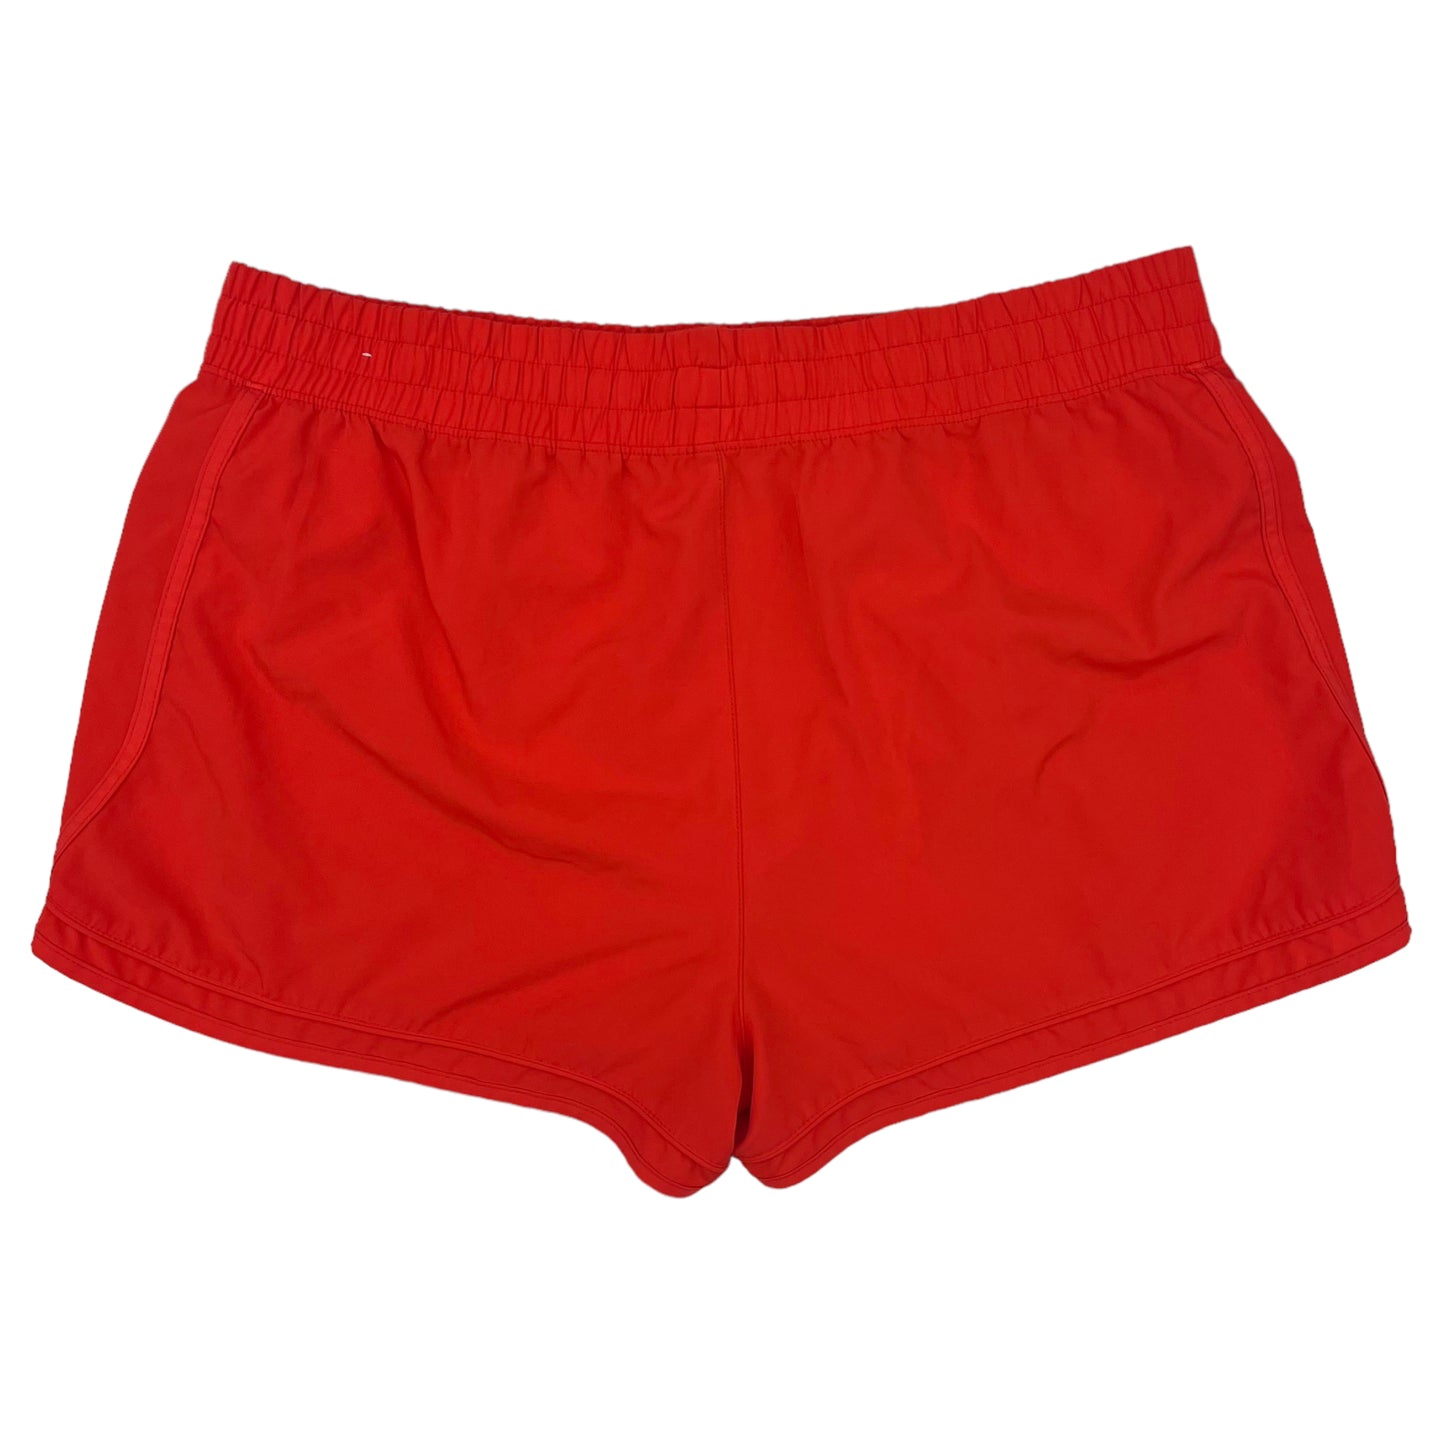 Athletic Shorts By Fila  Size: Xxl